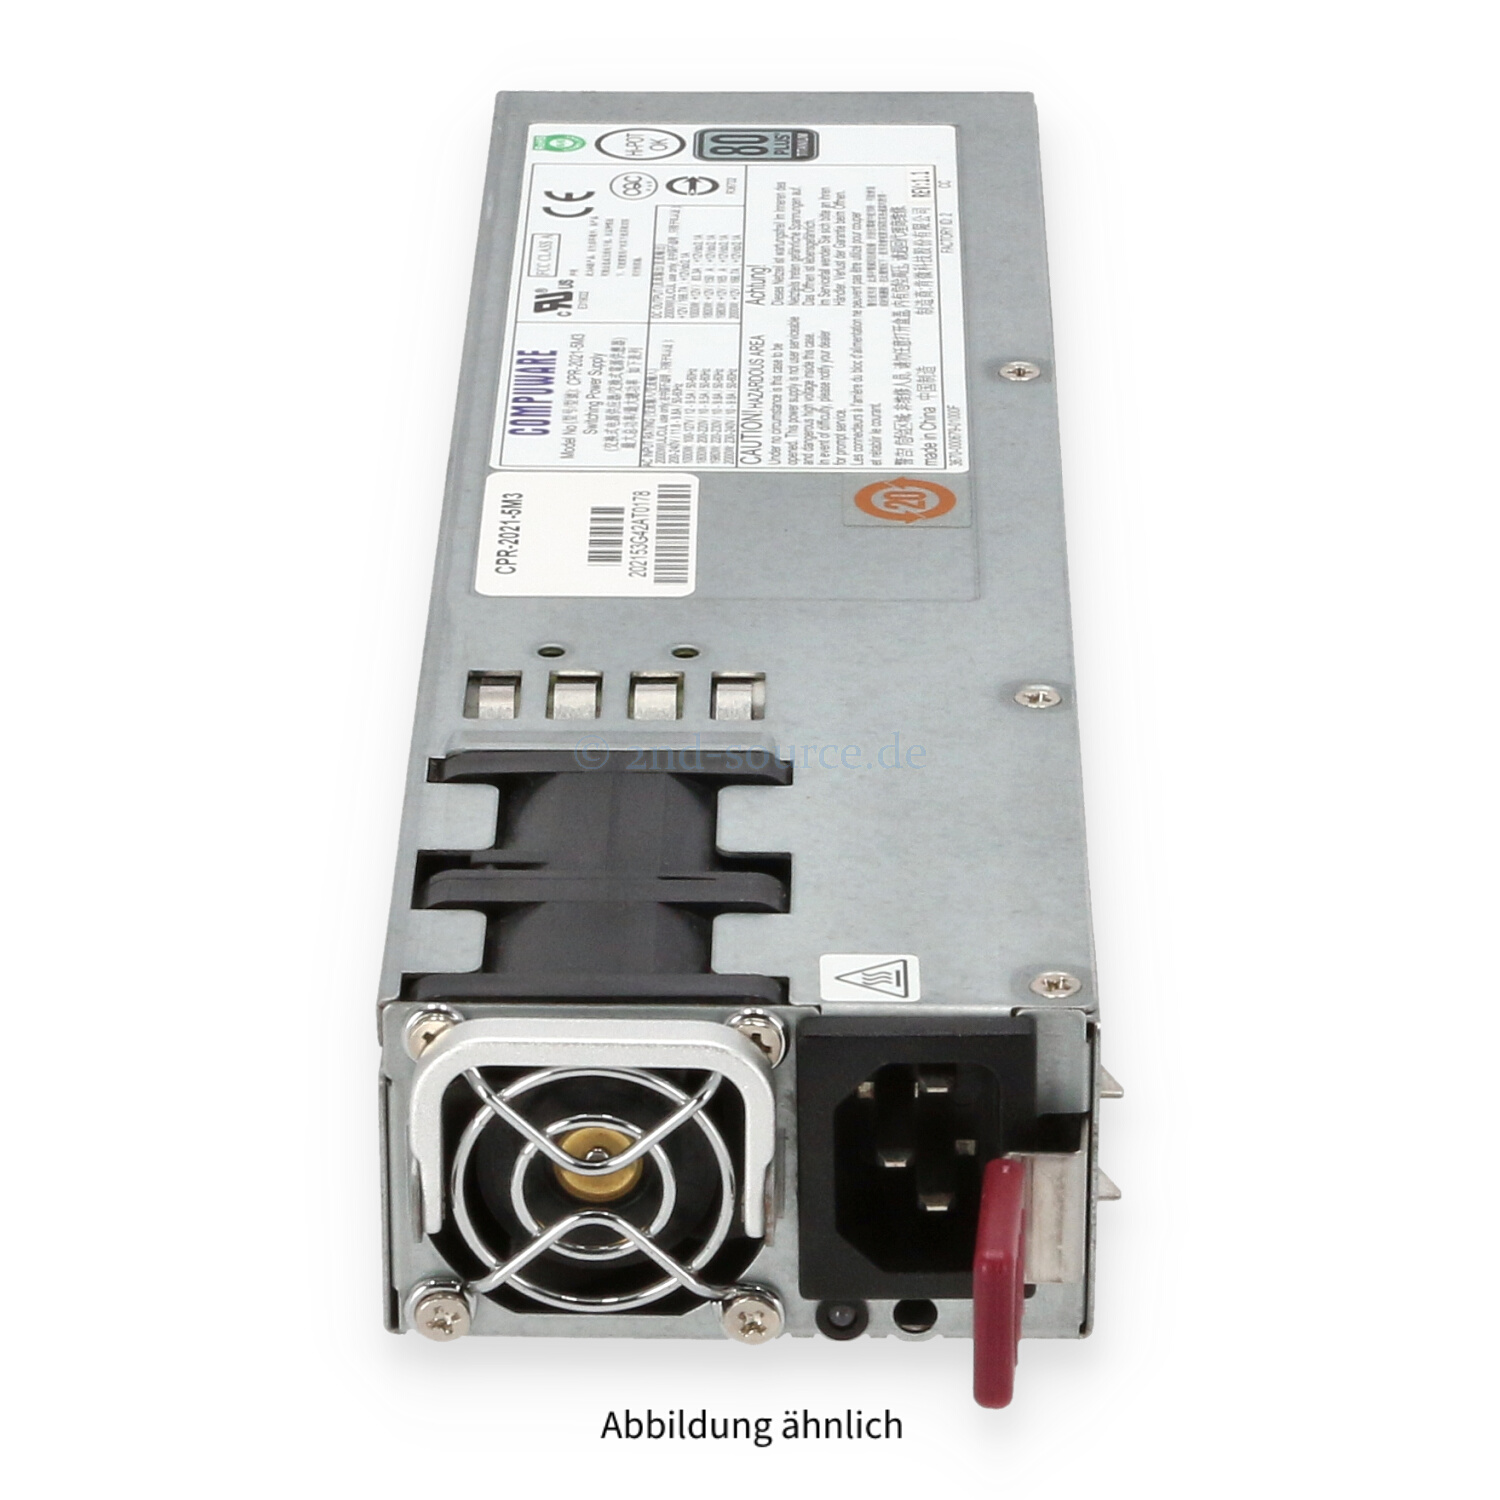 Compuware 2000W HotPlug Power Supply CPR-2021-5M3